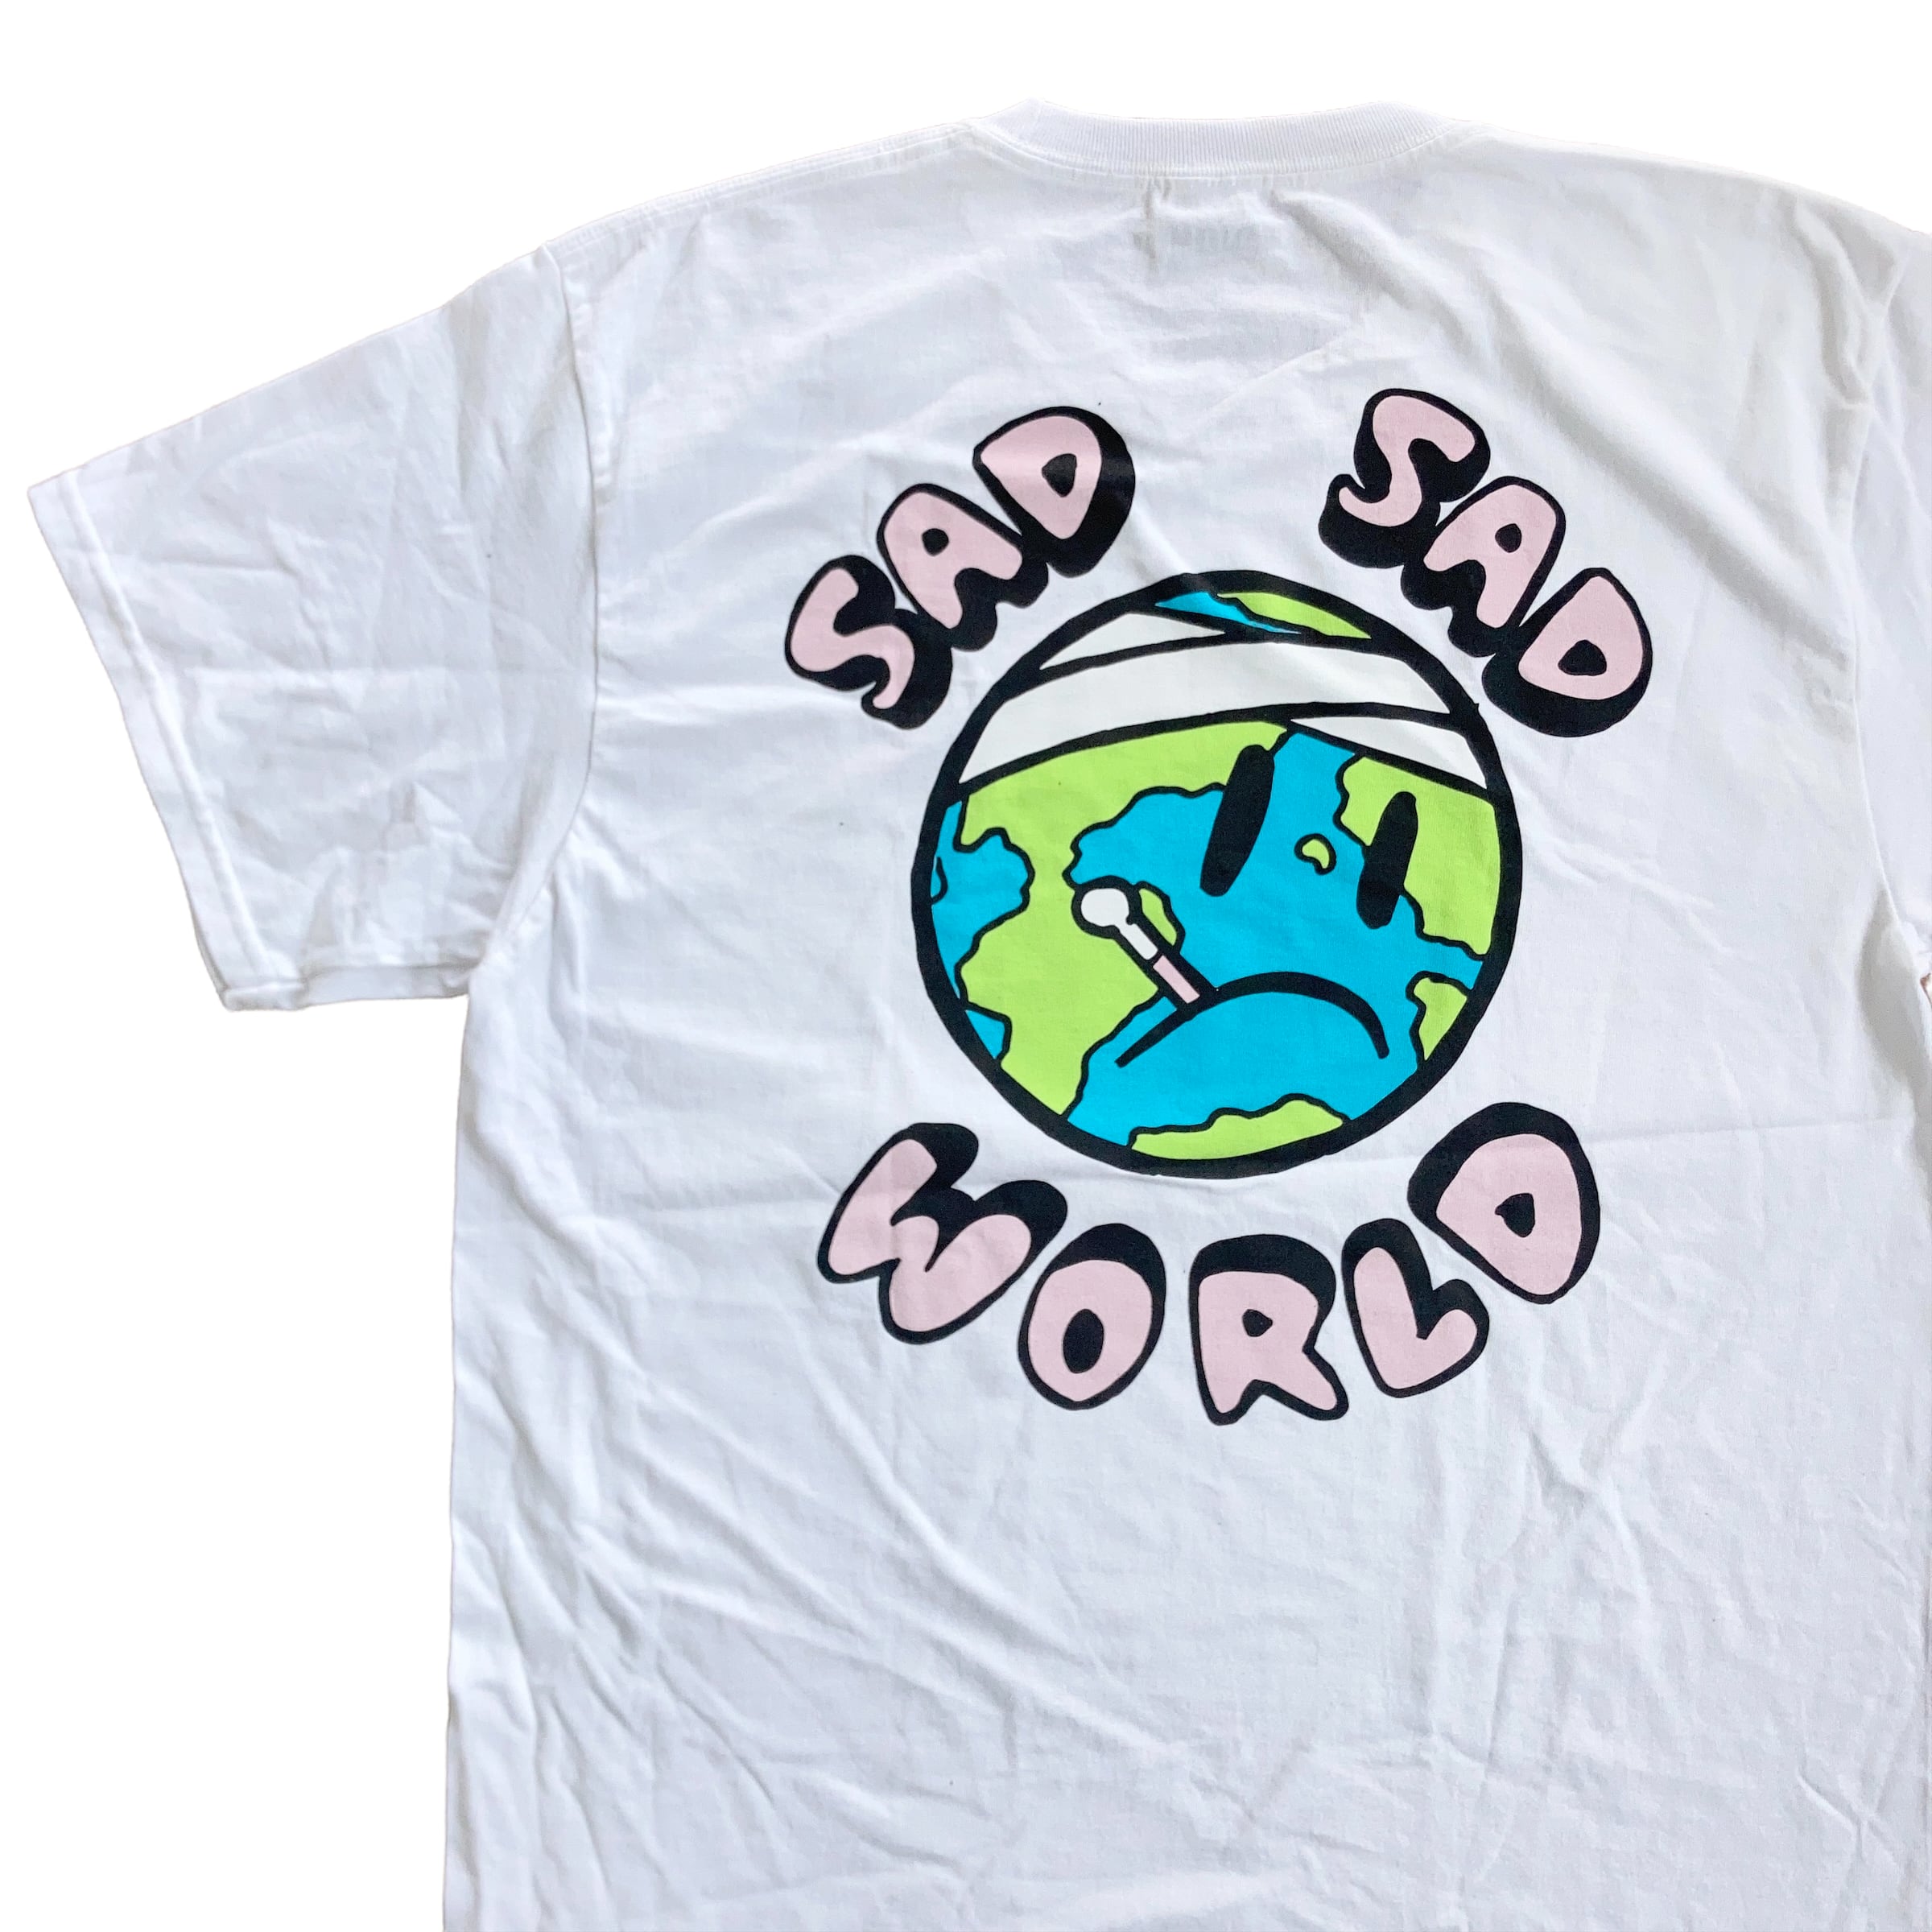 aLaB" SAD WORLD バックプリントTシャツ ホワイト SIZE Lアメリカ